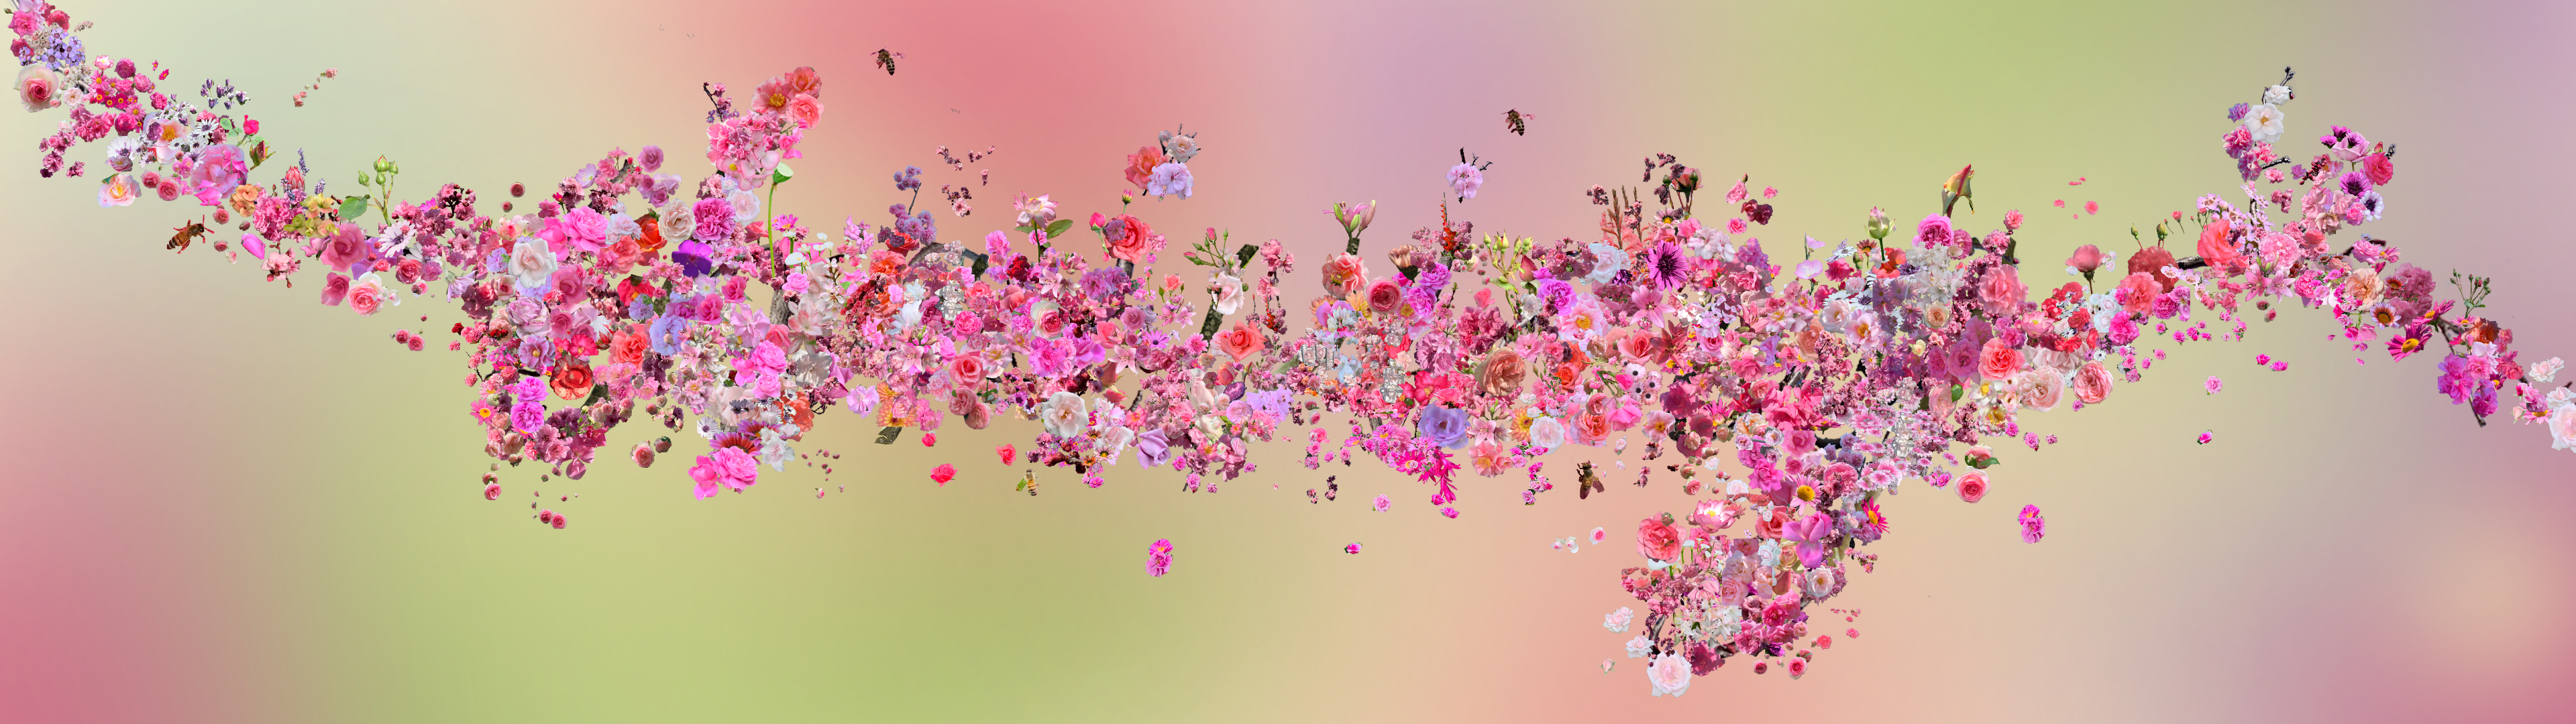 Digital collage of flowers